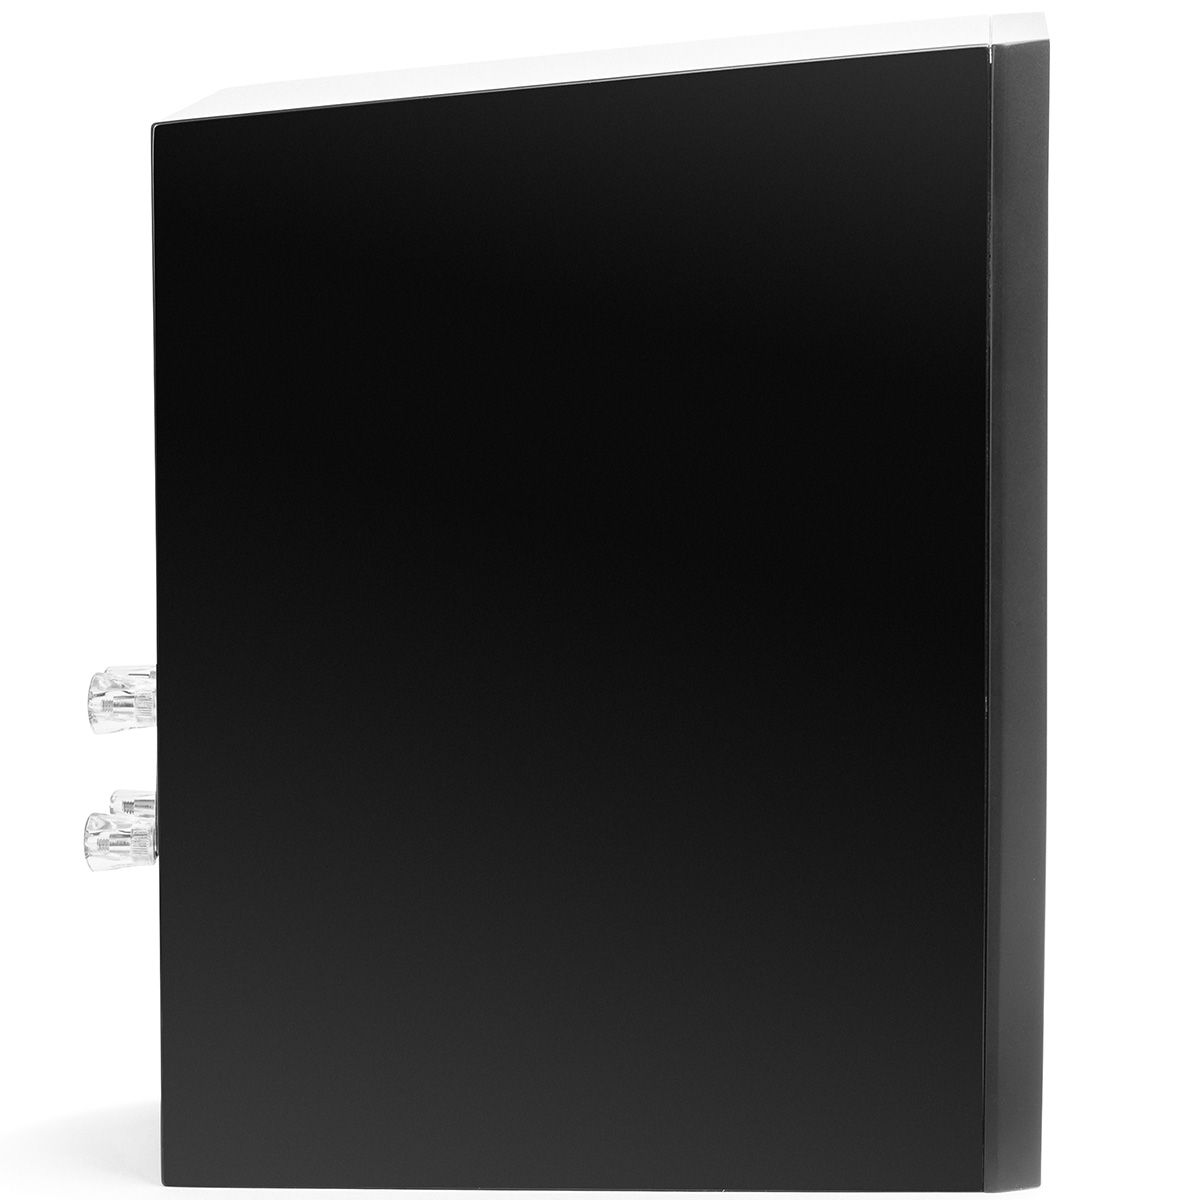 MartinLogan Motion XT B100  bookshelf Speaker in black, side view with grilles on white background